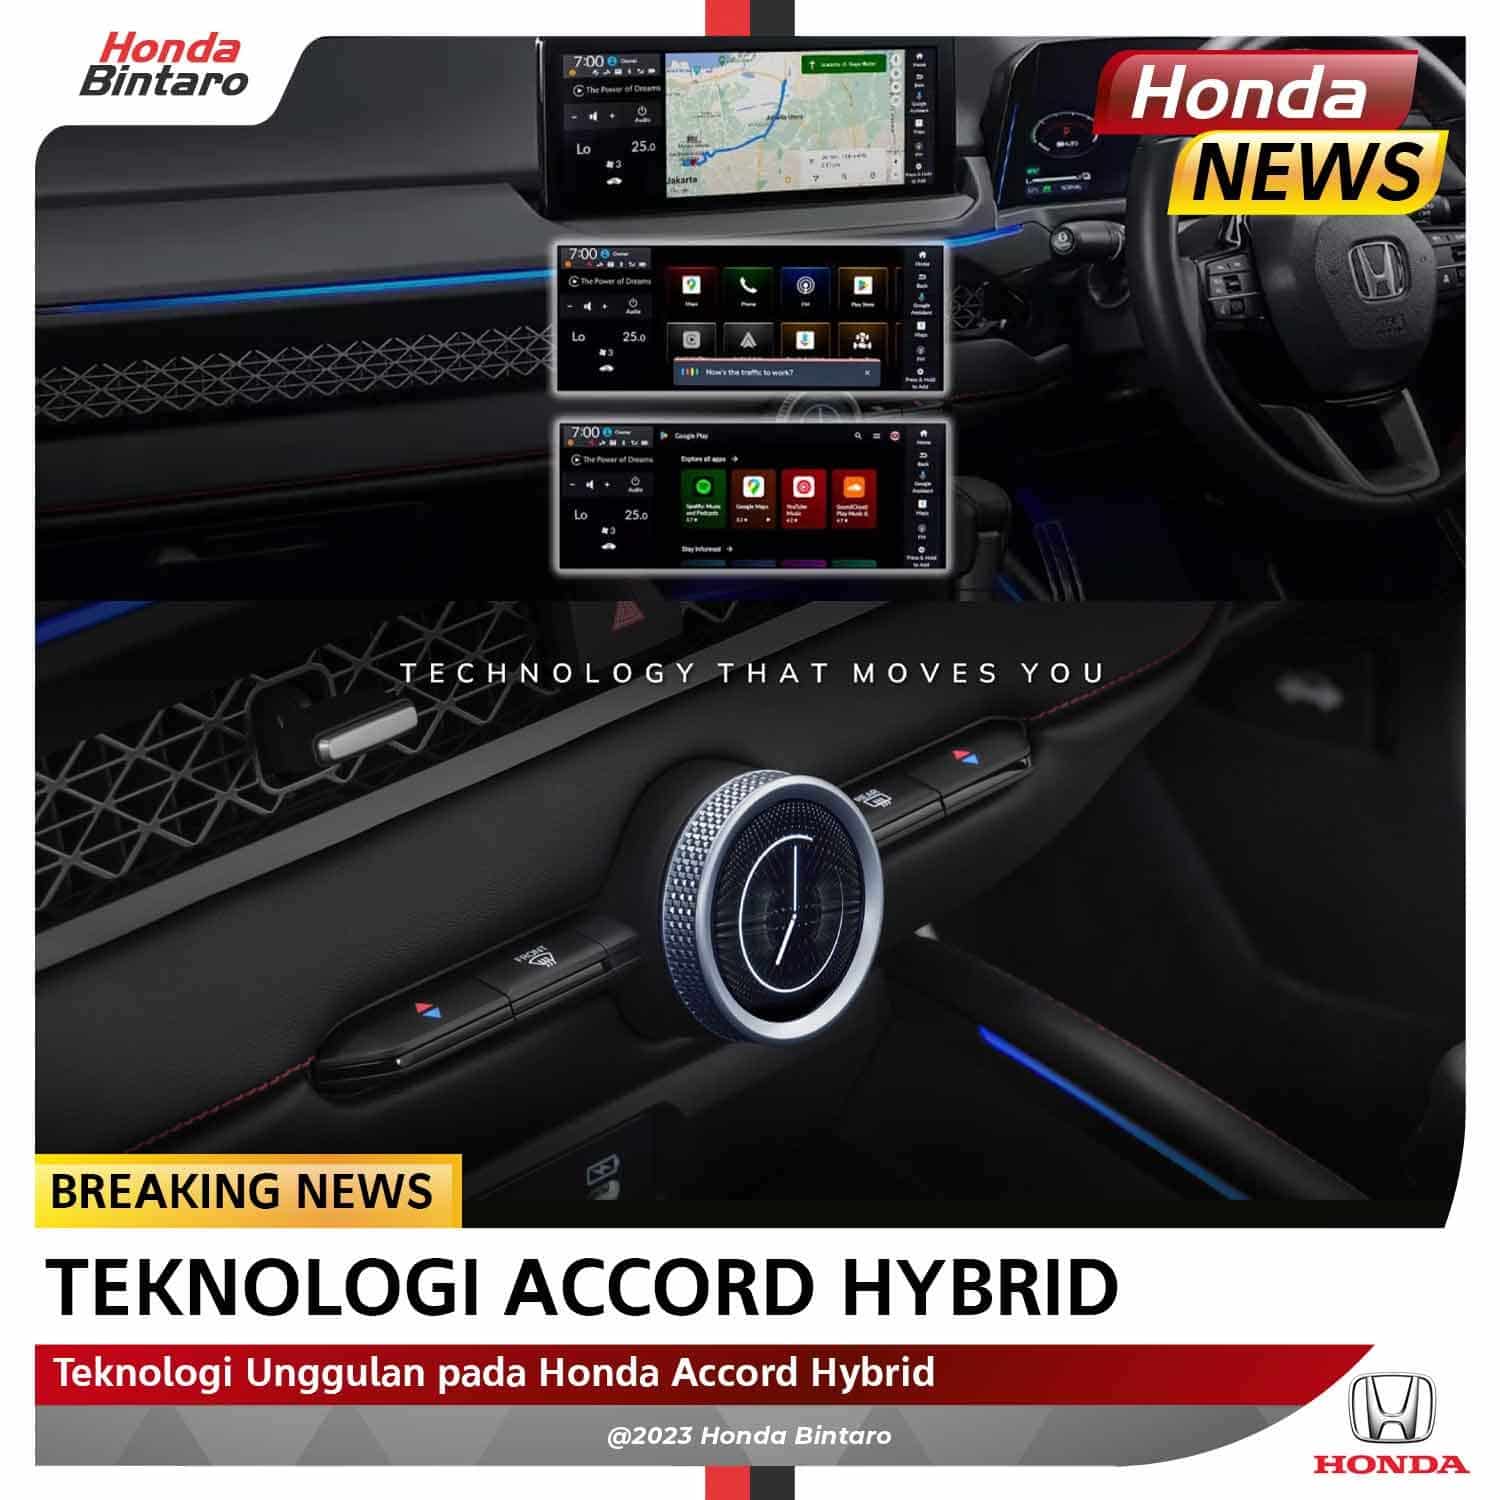 Teknologi Unggulan pada Honda Accord Hybrid